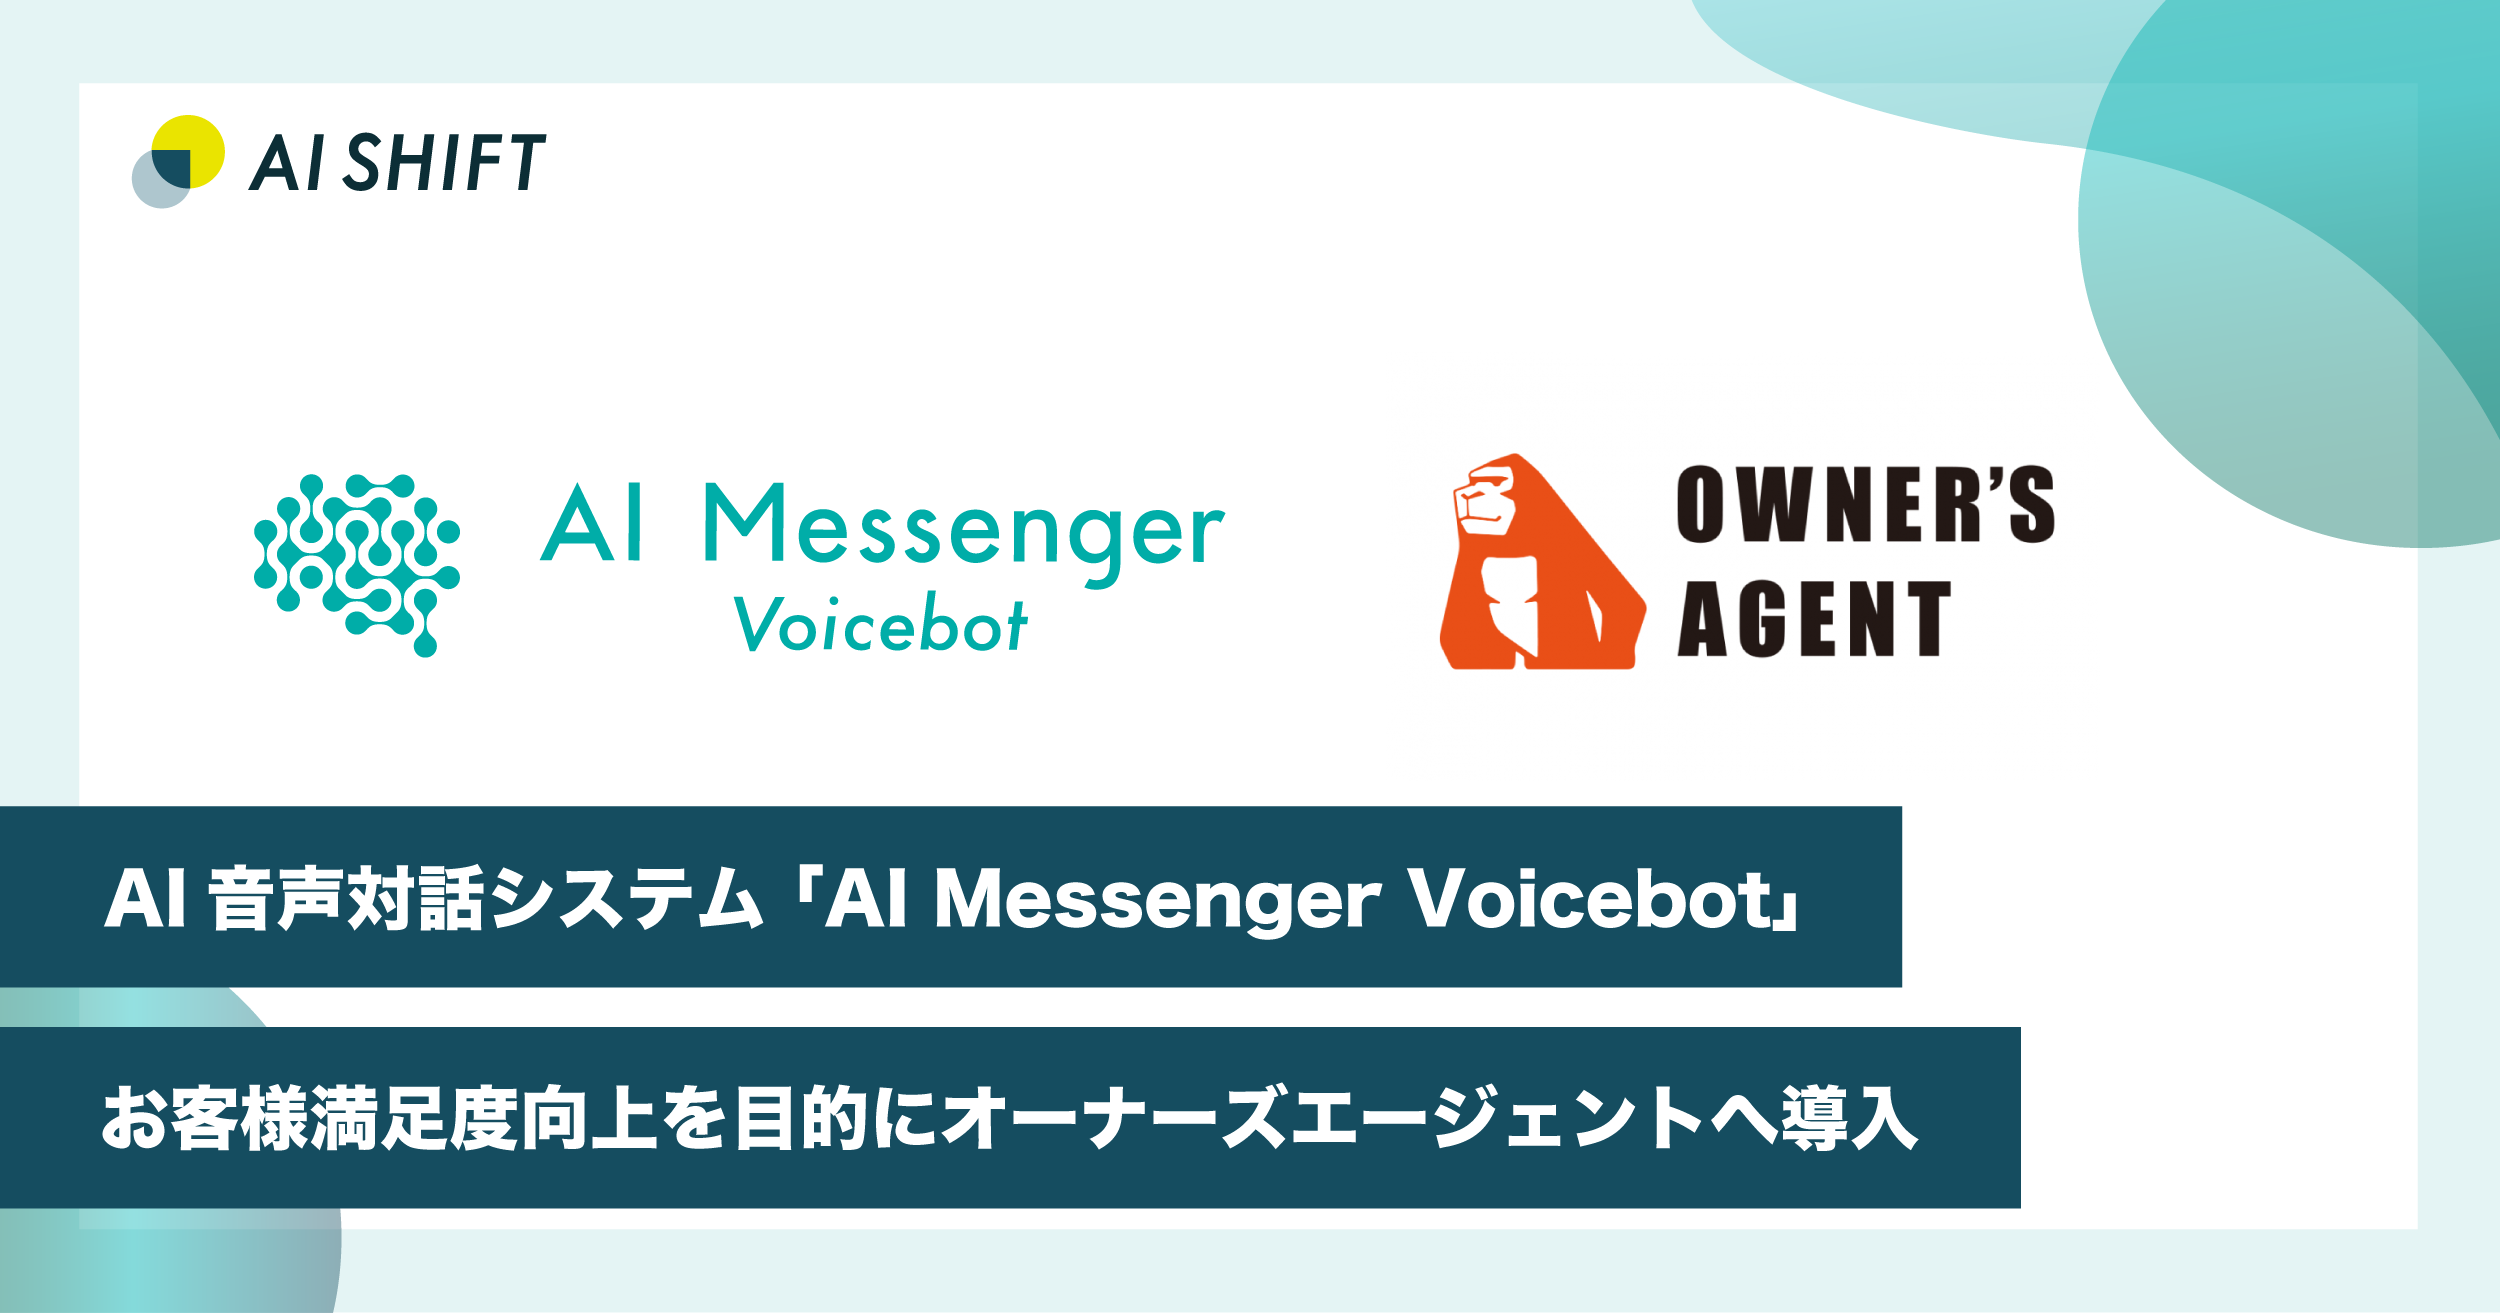 AI自動音声対話システム「AI Messenger Voicebot」、 お客様満足度向上を目的にオーナーズエージェントへ導入